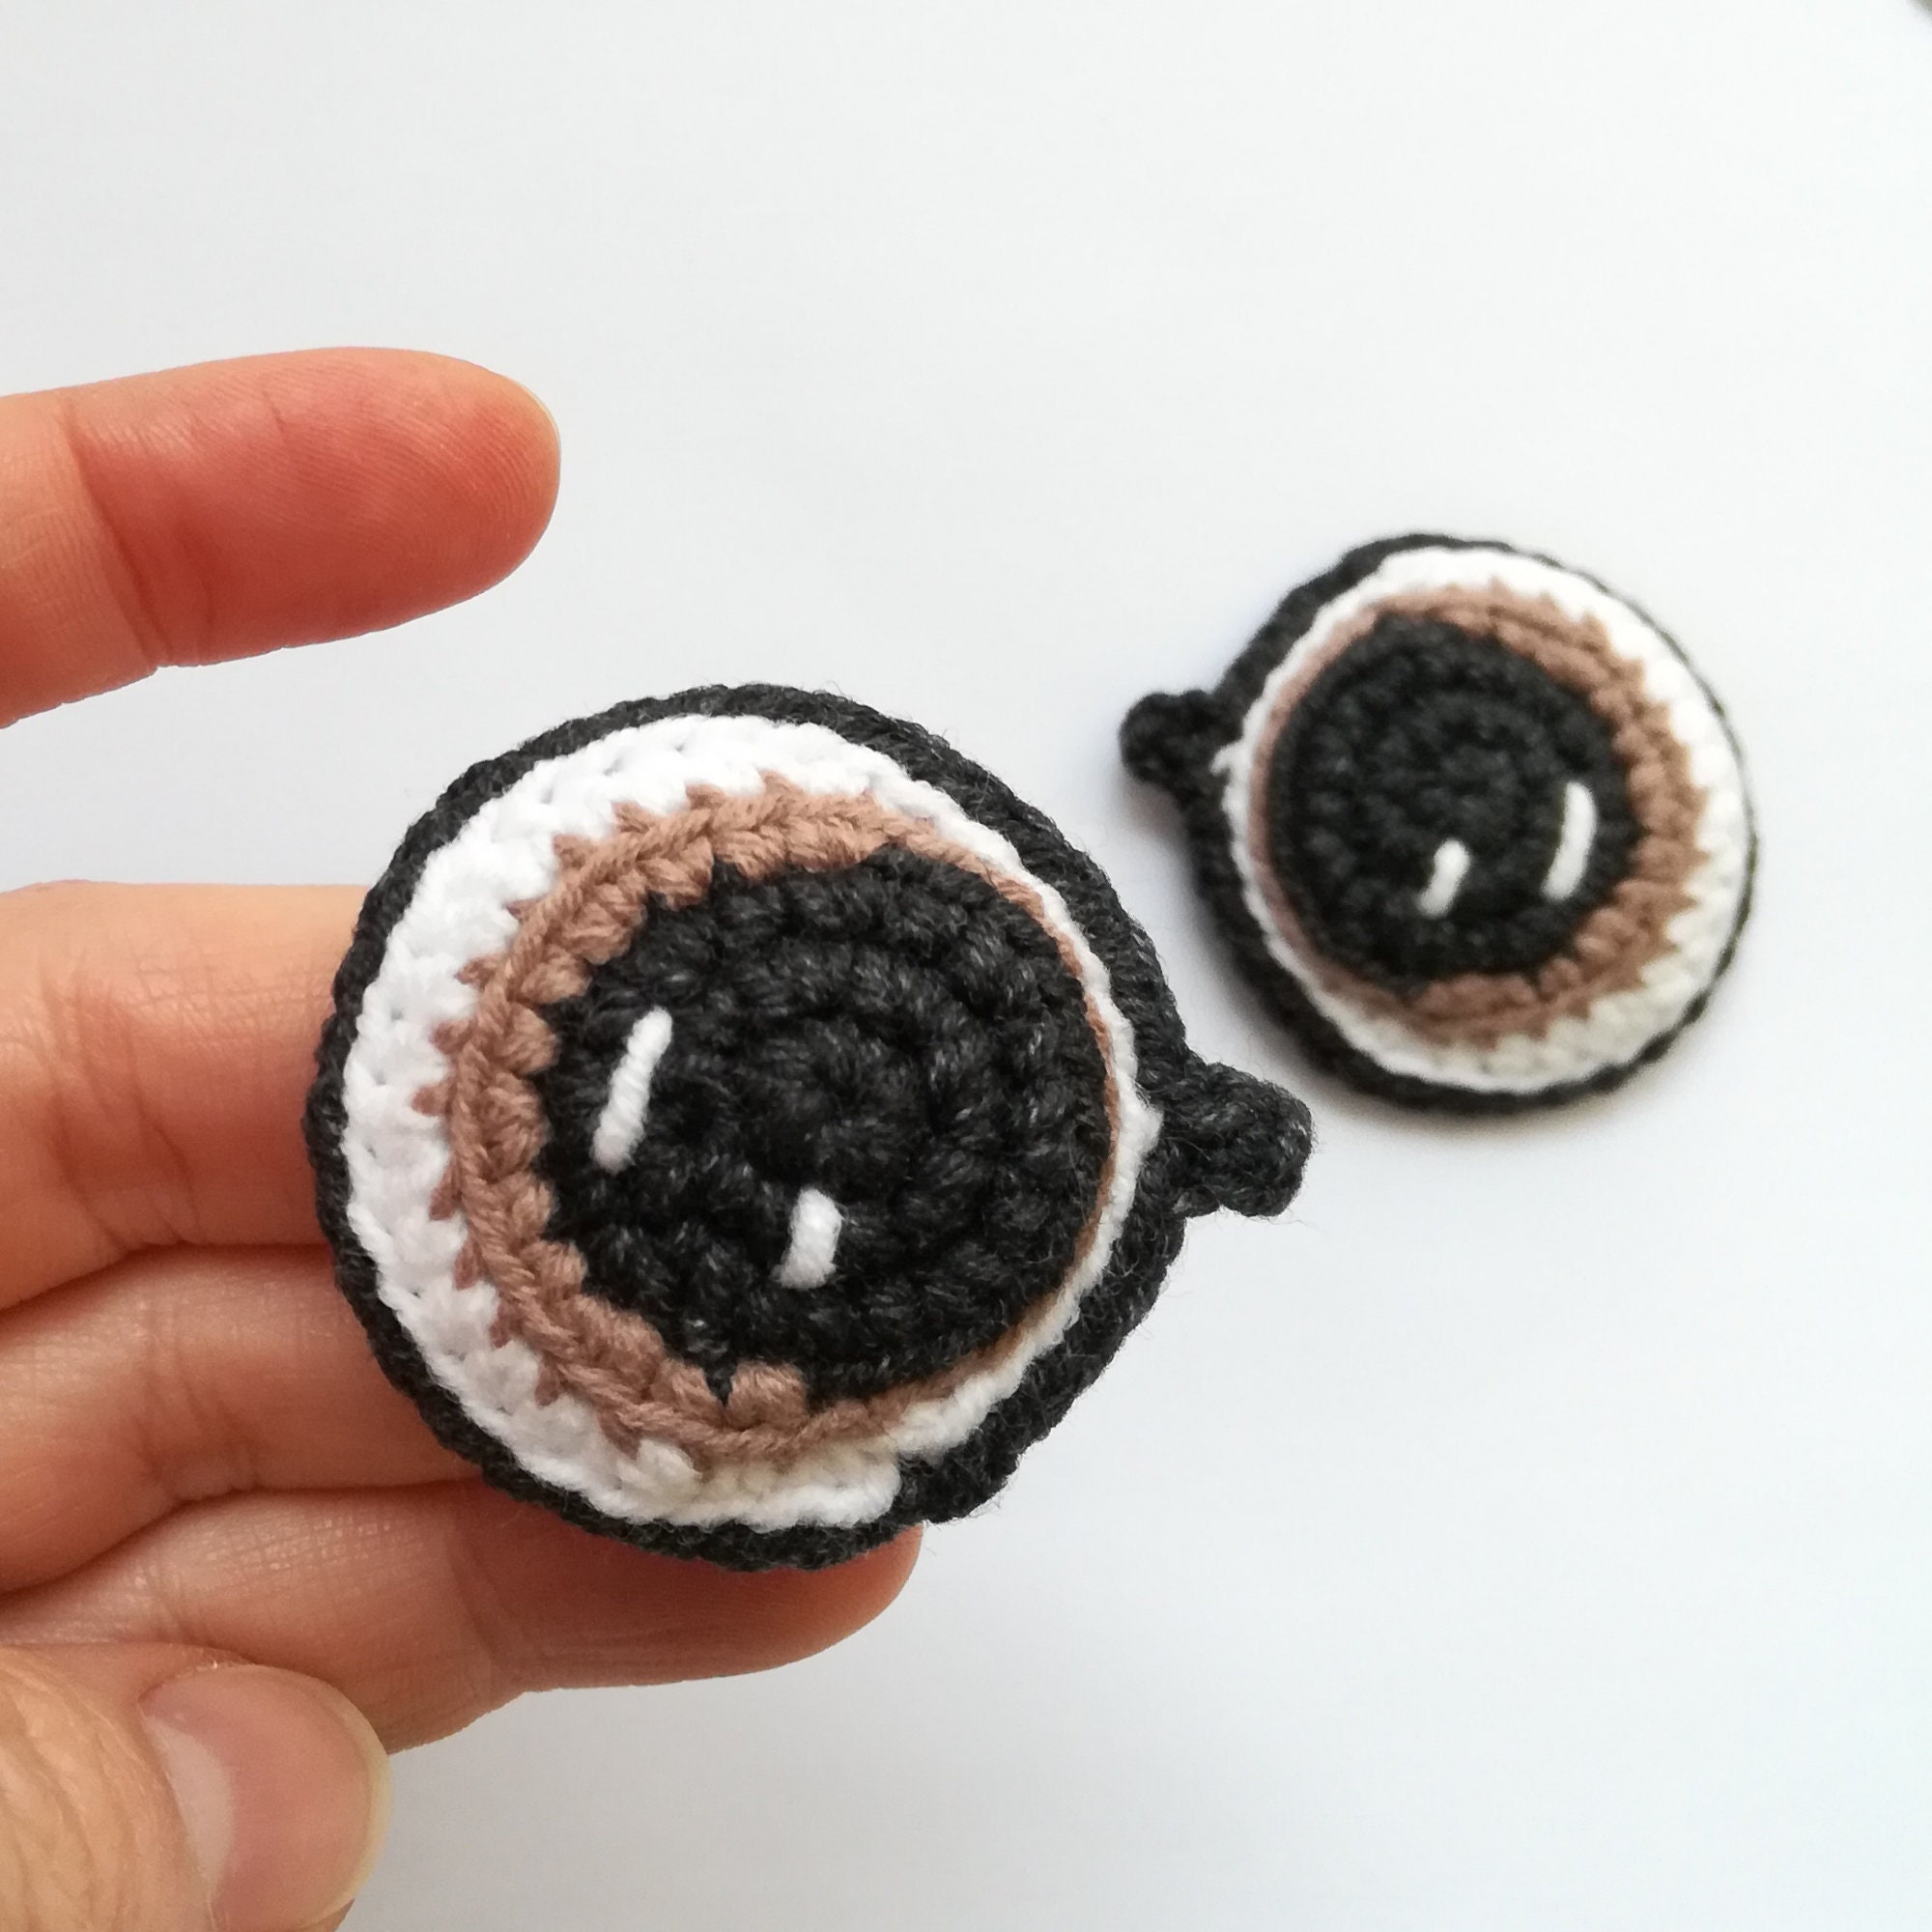 Crochet Eyes Pattern Doll Eyes english PDF, Photo Tutorial, Instant  Download 